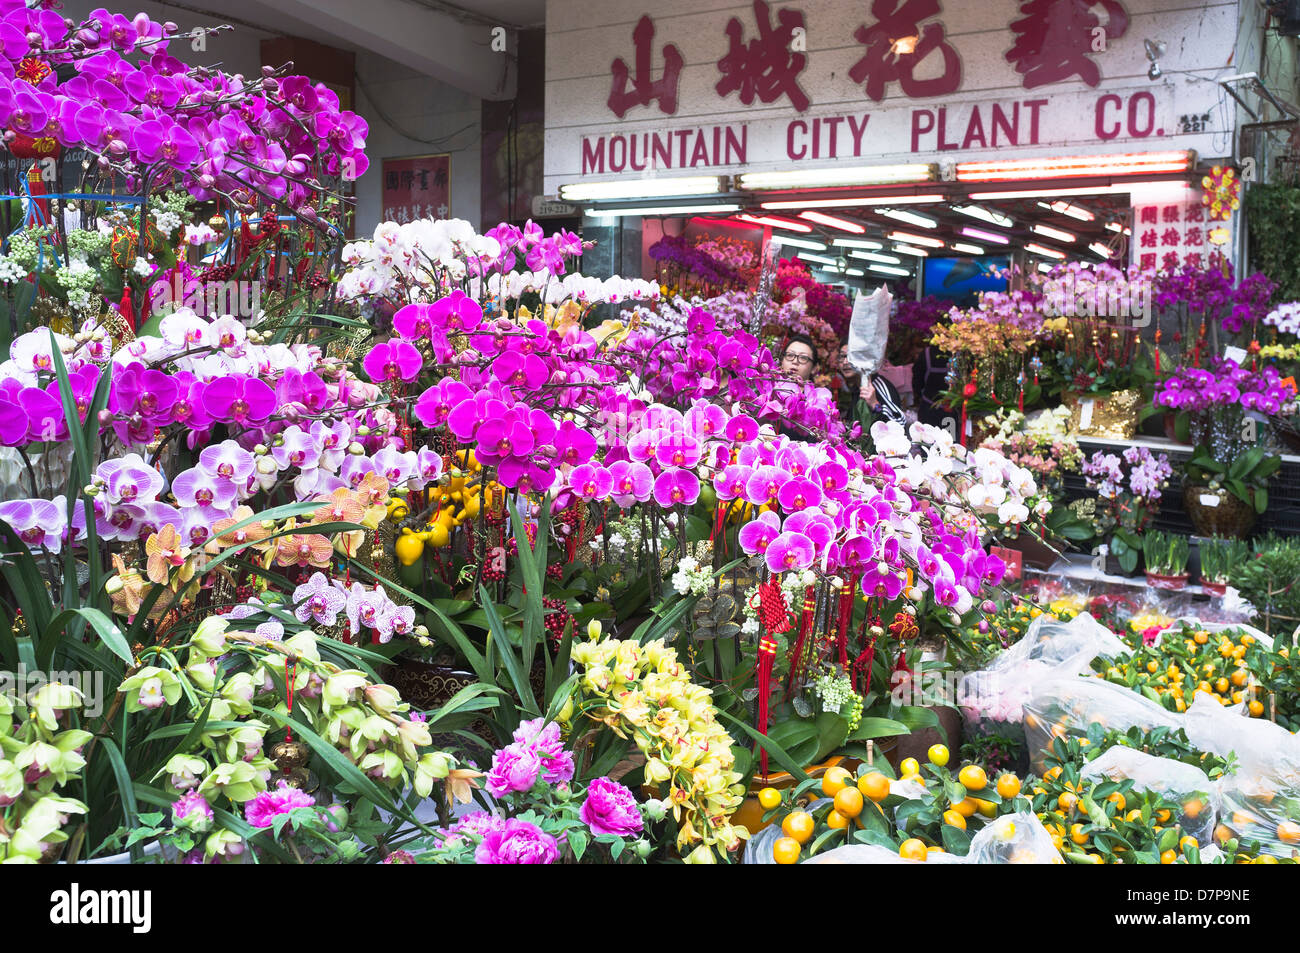 dh Blumenmarkt MONG KOK HONG KONG Chinesische Neujahrsblumen Dekoration Markt Stall Display mongkok Blumengeschäft außerhalb china Stockfoto